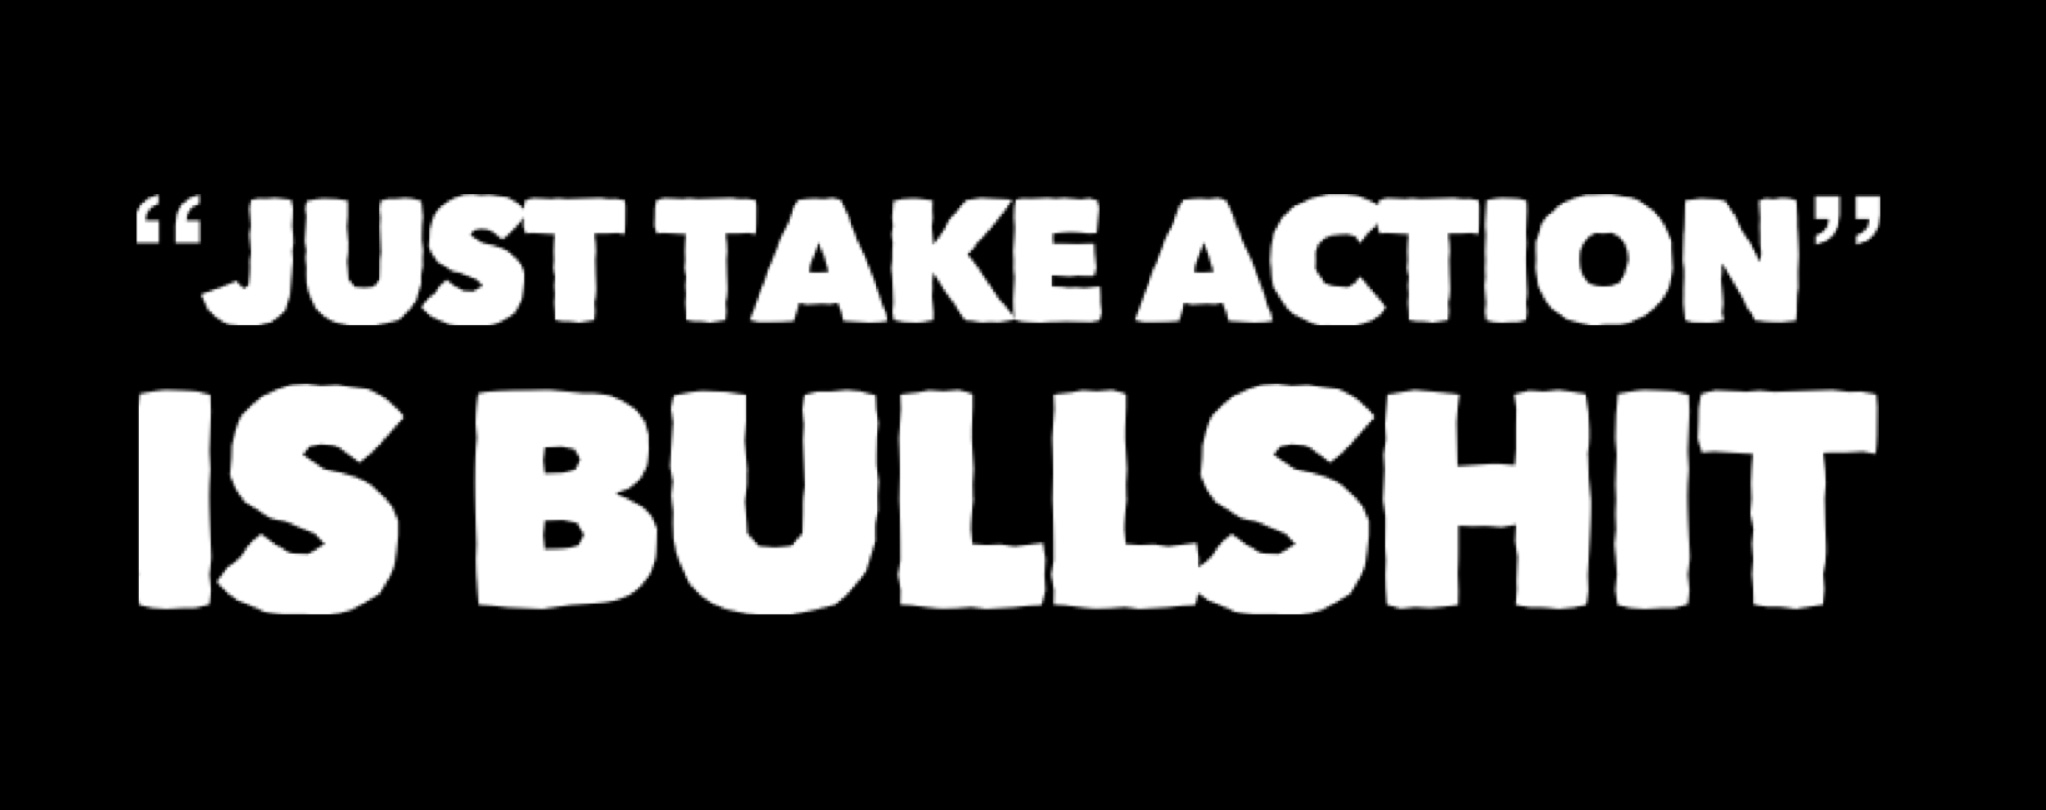 Just Take Action - Men's Mindset